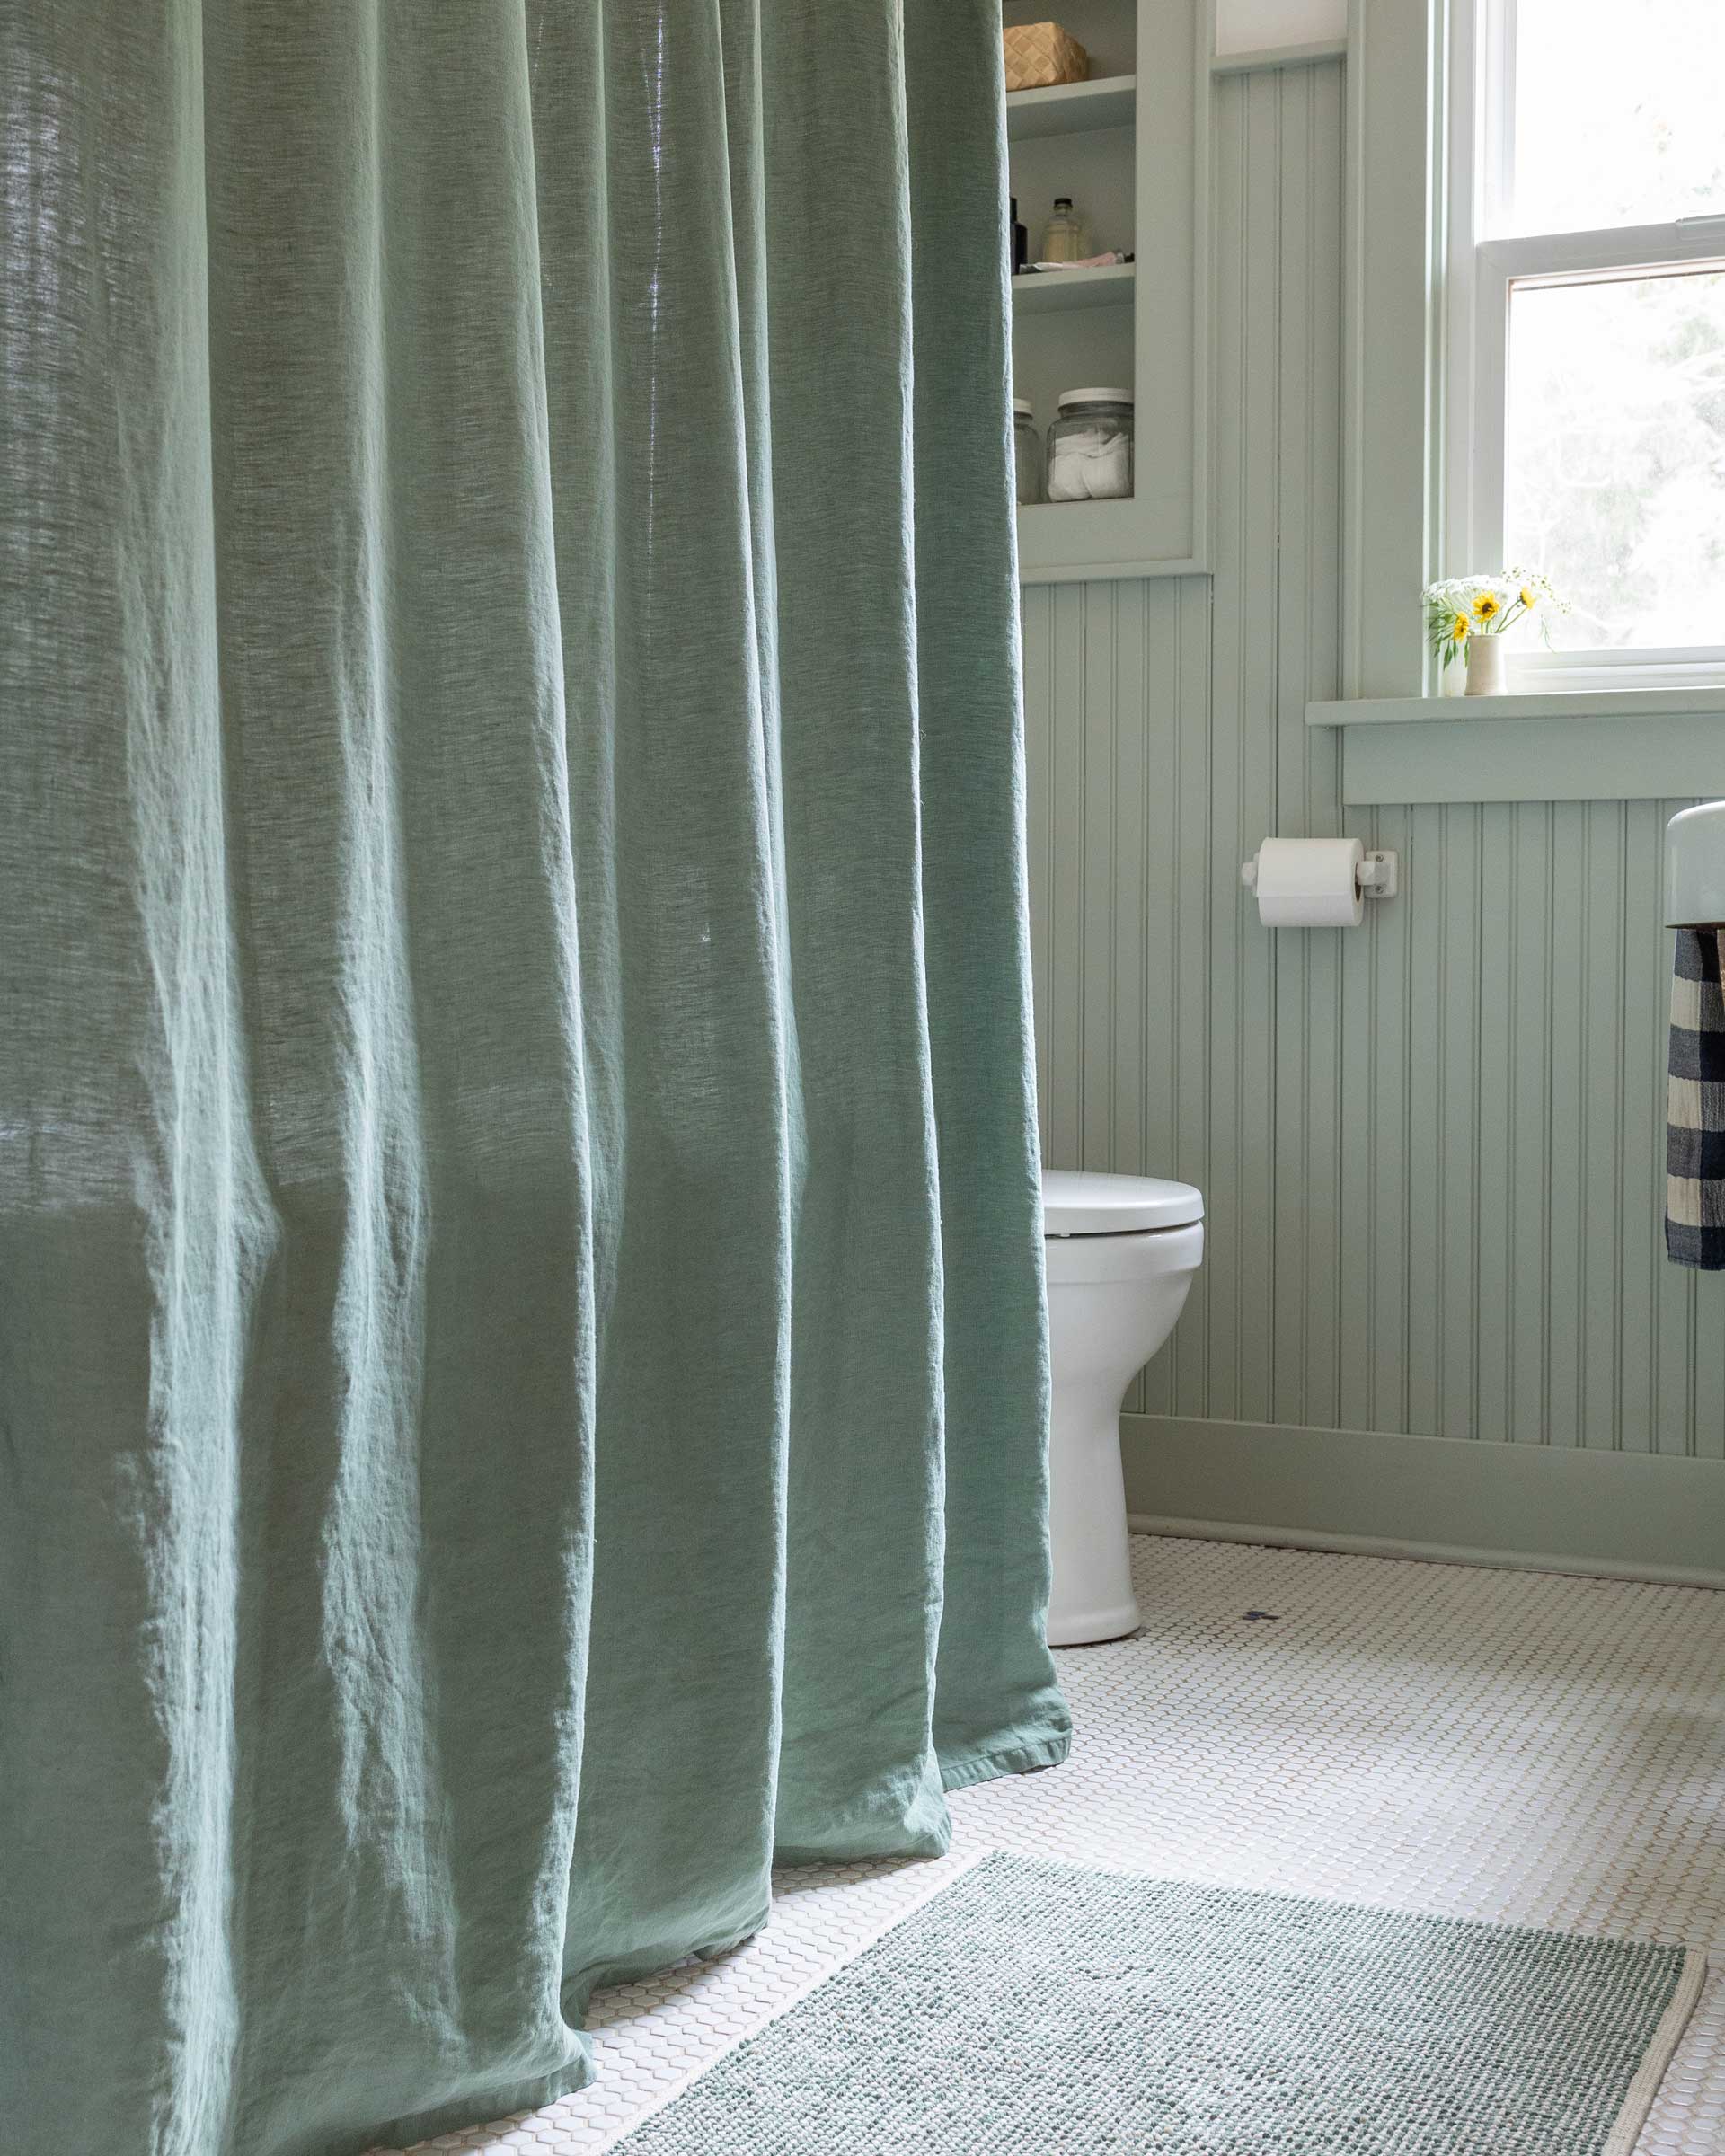 A bathroom with a green linen shower curtain.